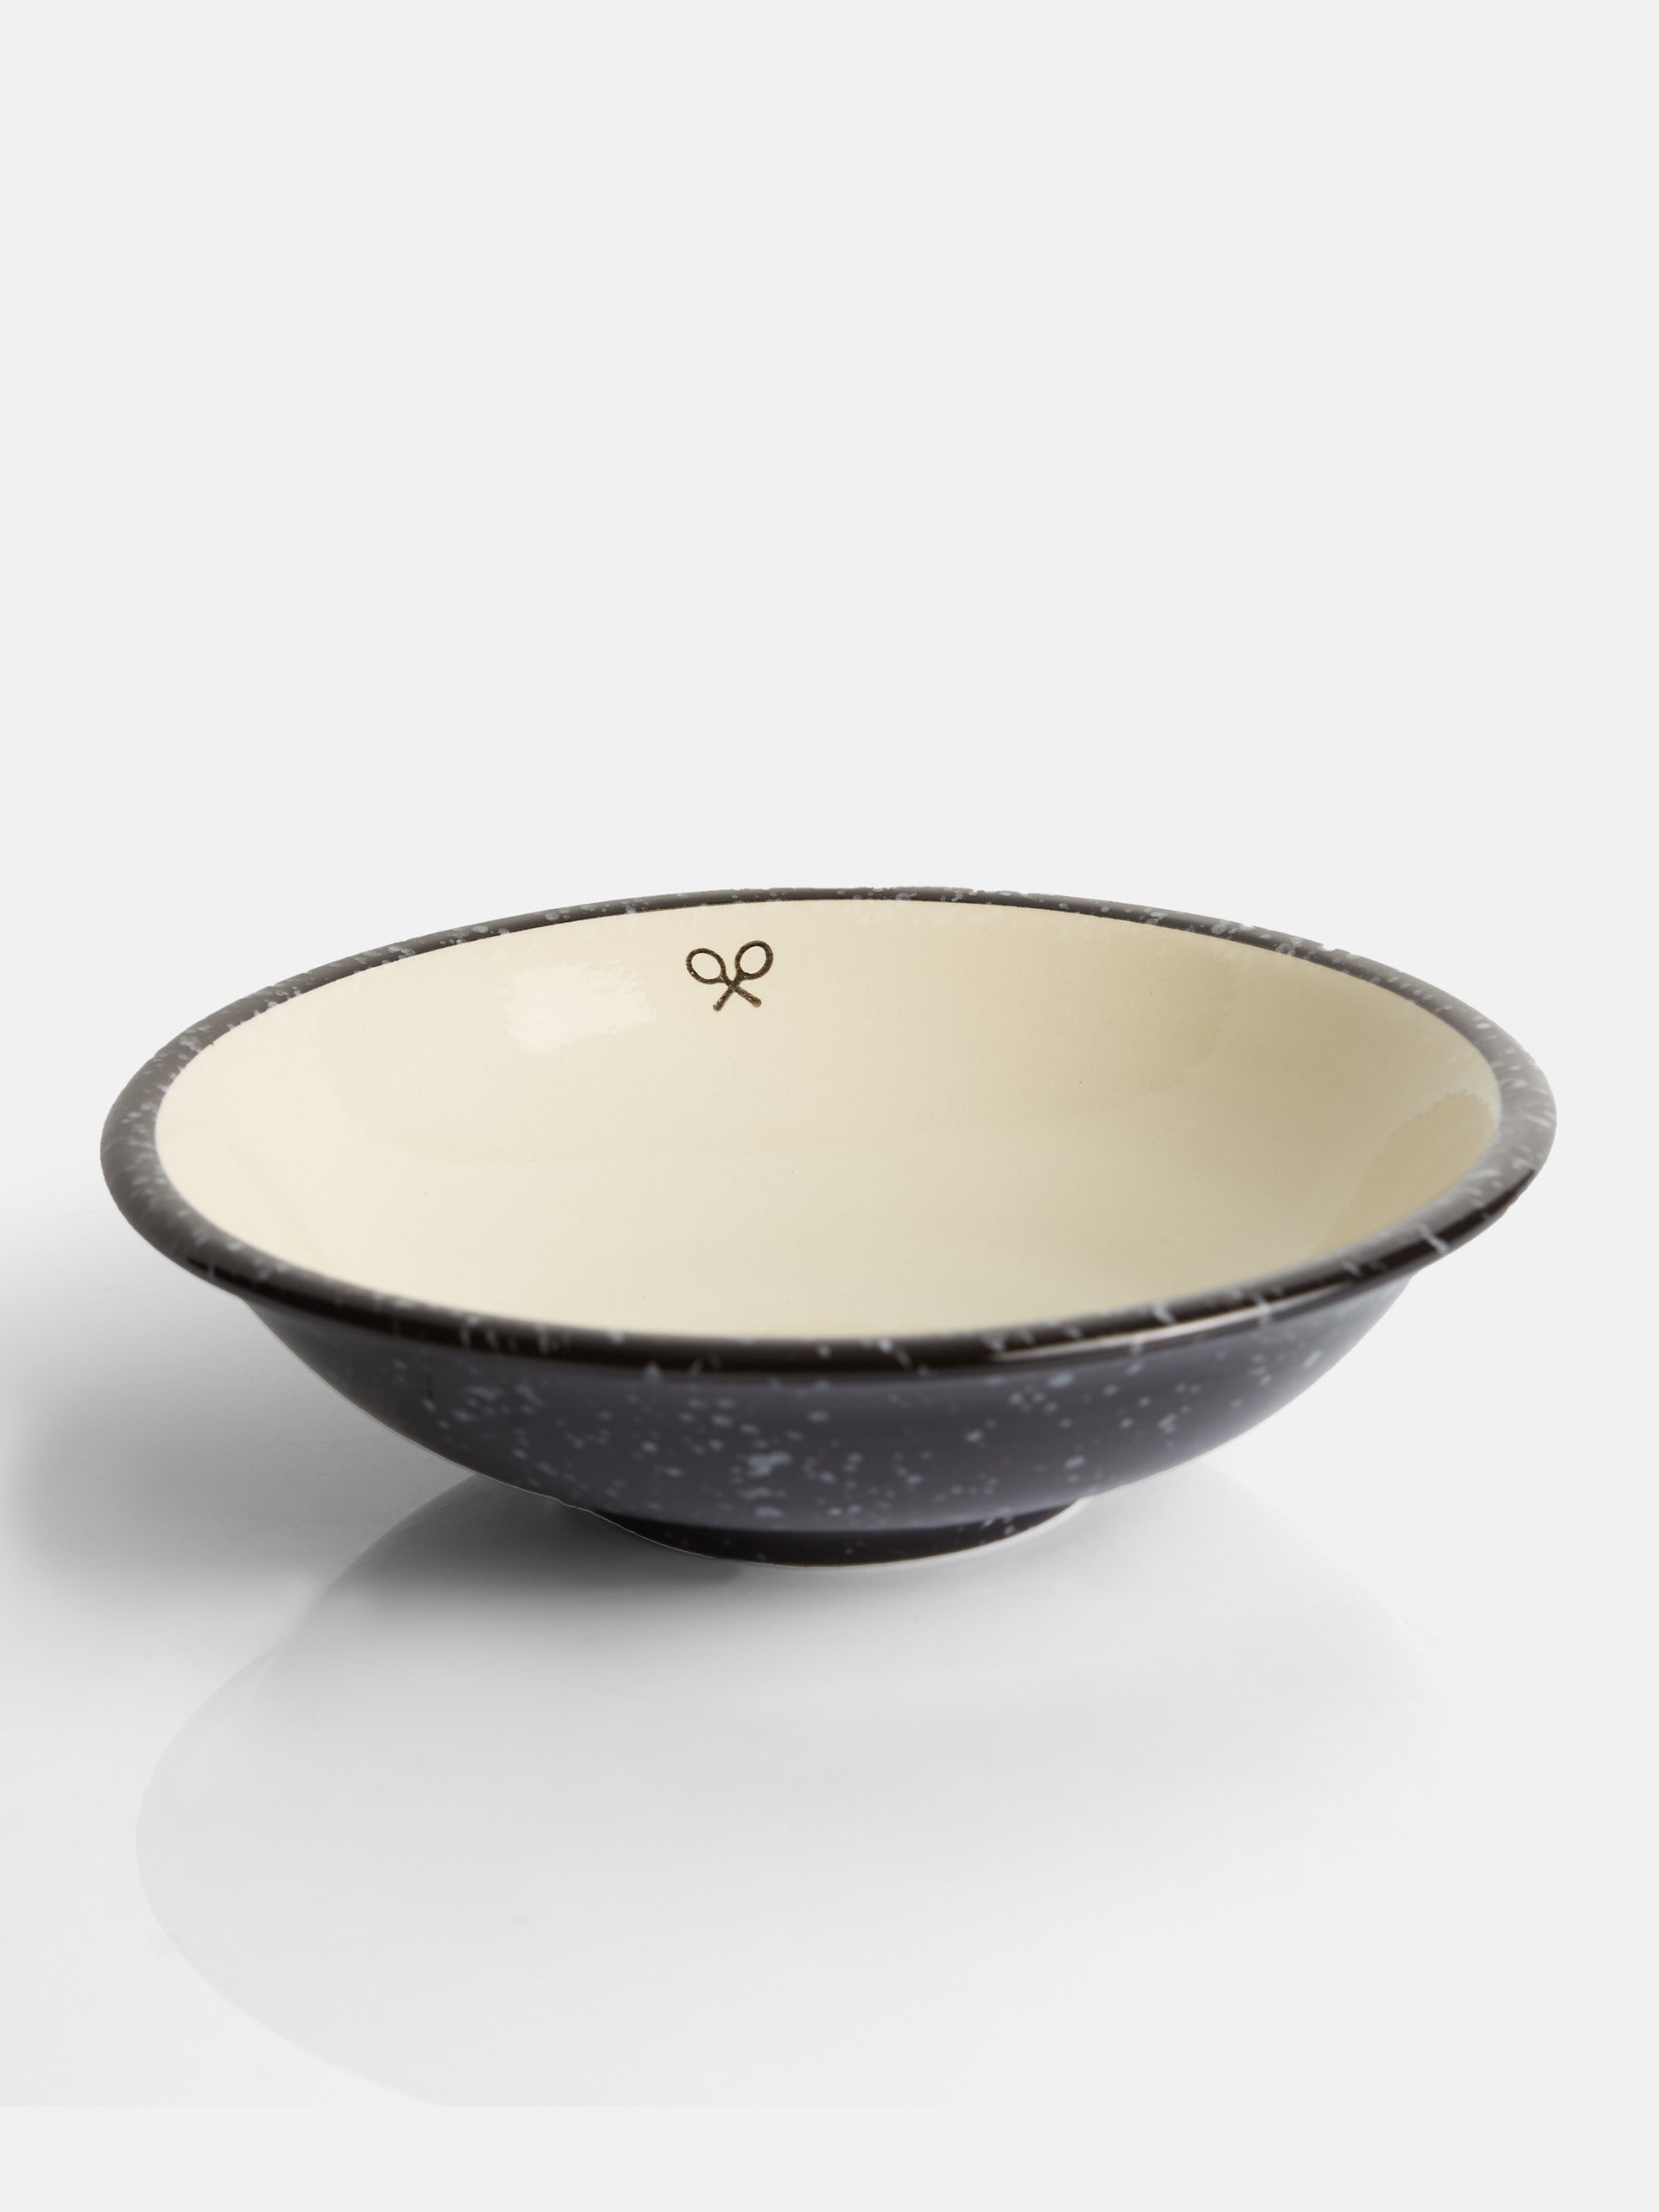 Two-tone enamel ceramic deep plate